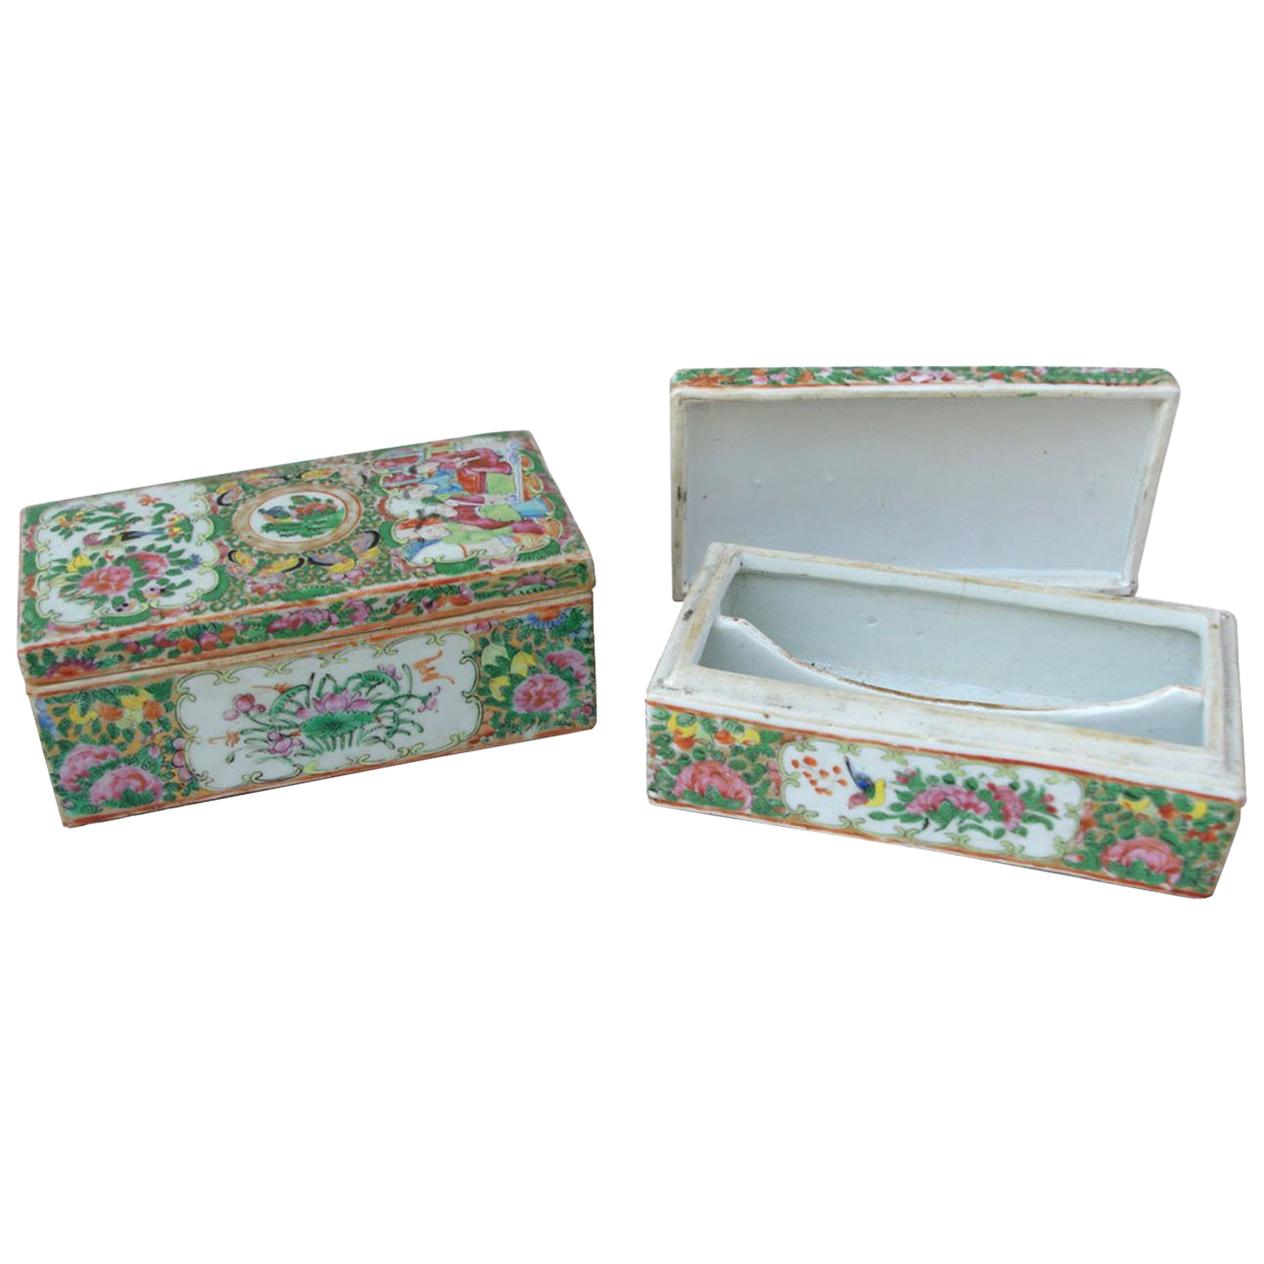 Pair of Canton Porcelain Boxes, 1900 Period